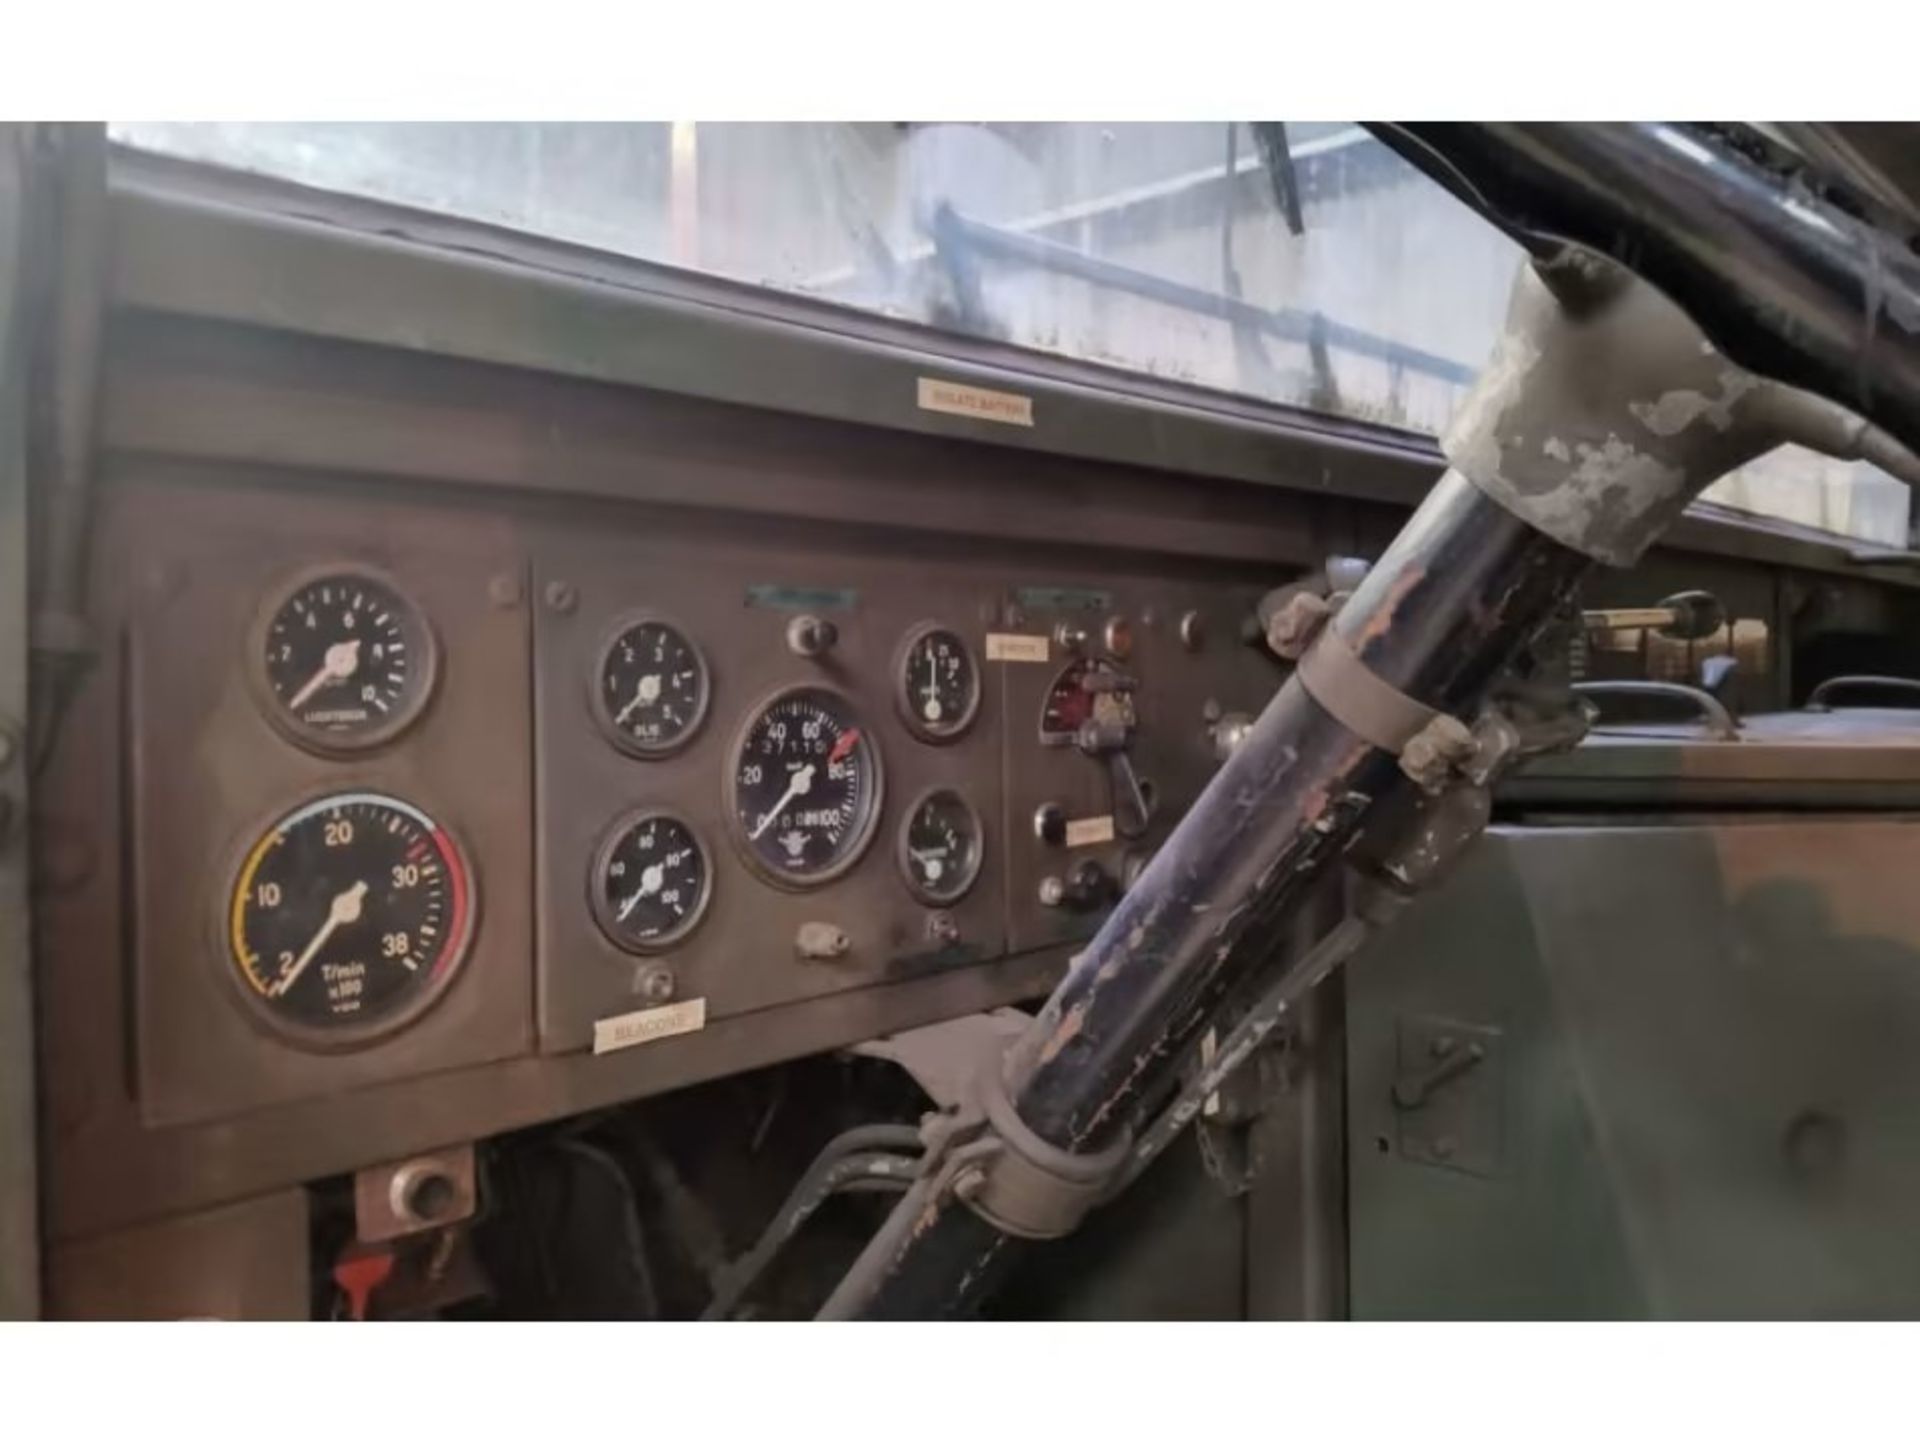 1968 DAF YA616 - 6-WHEEL DRIVE MILITARY CRANE VEHICLE - TAX MOT EXEMPT - RUNS, STARTS, DRIVES LIFTS - Image 8 of 8